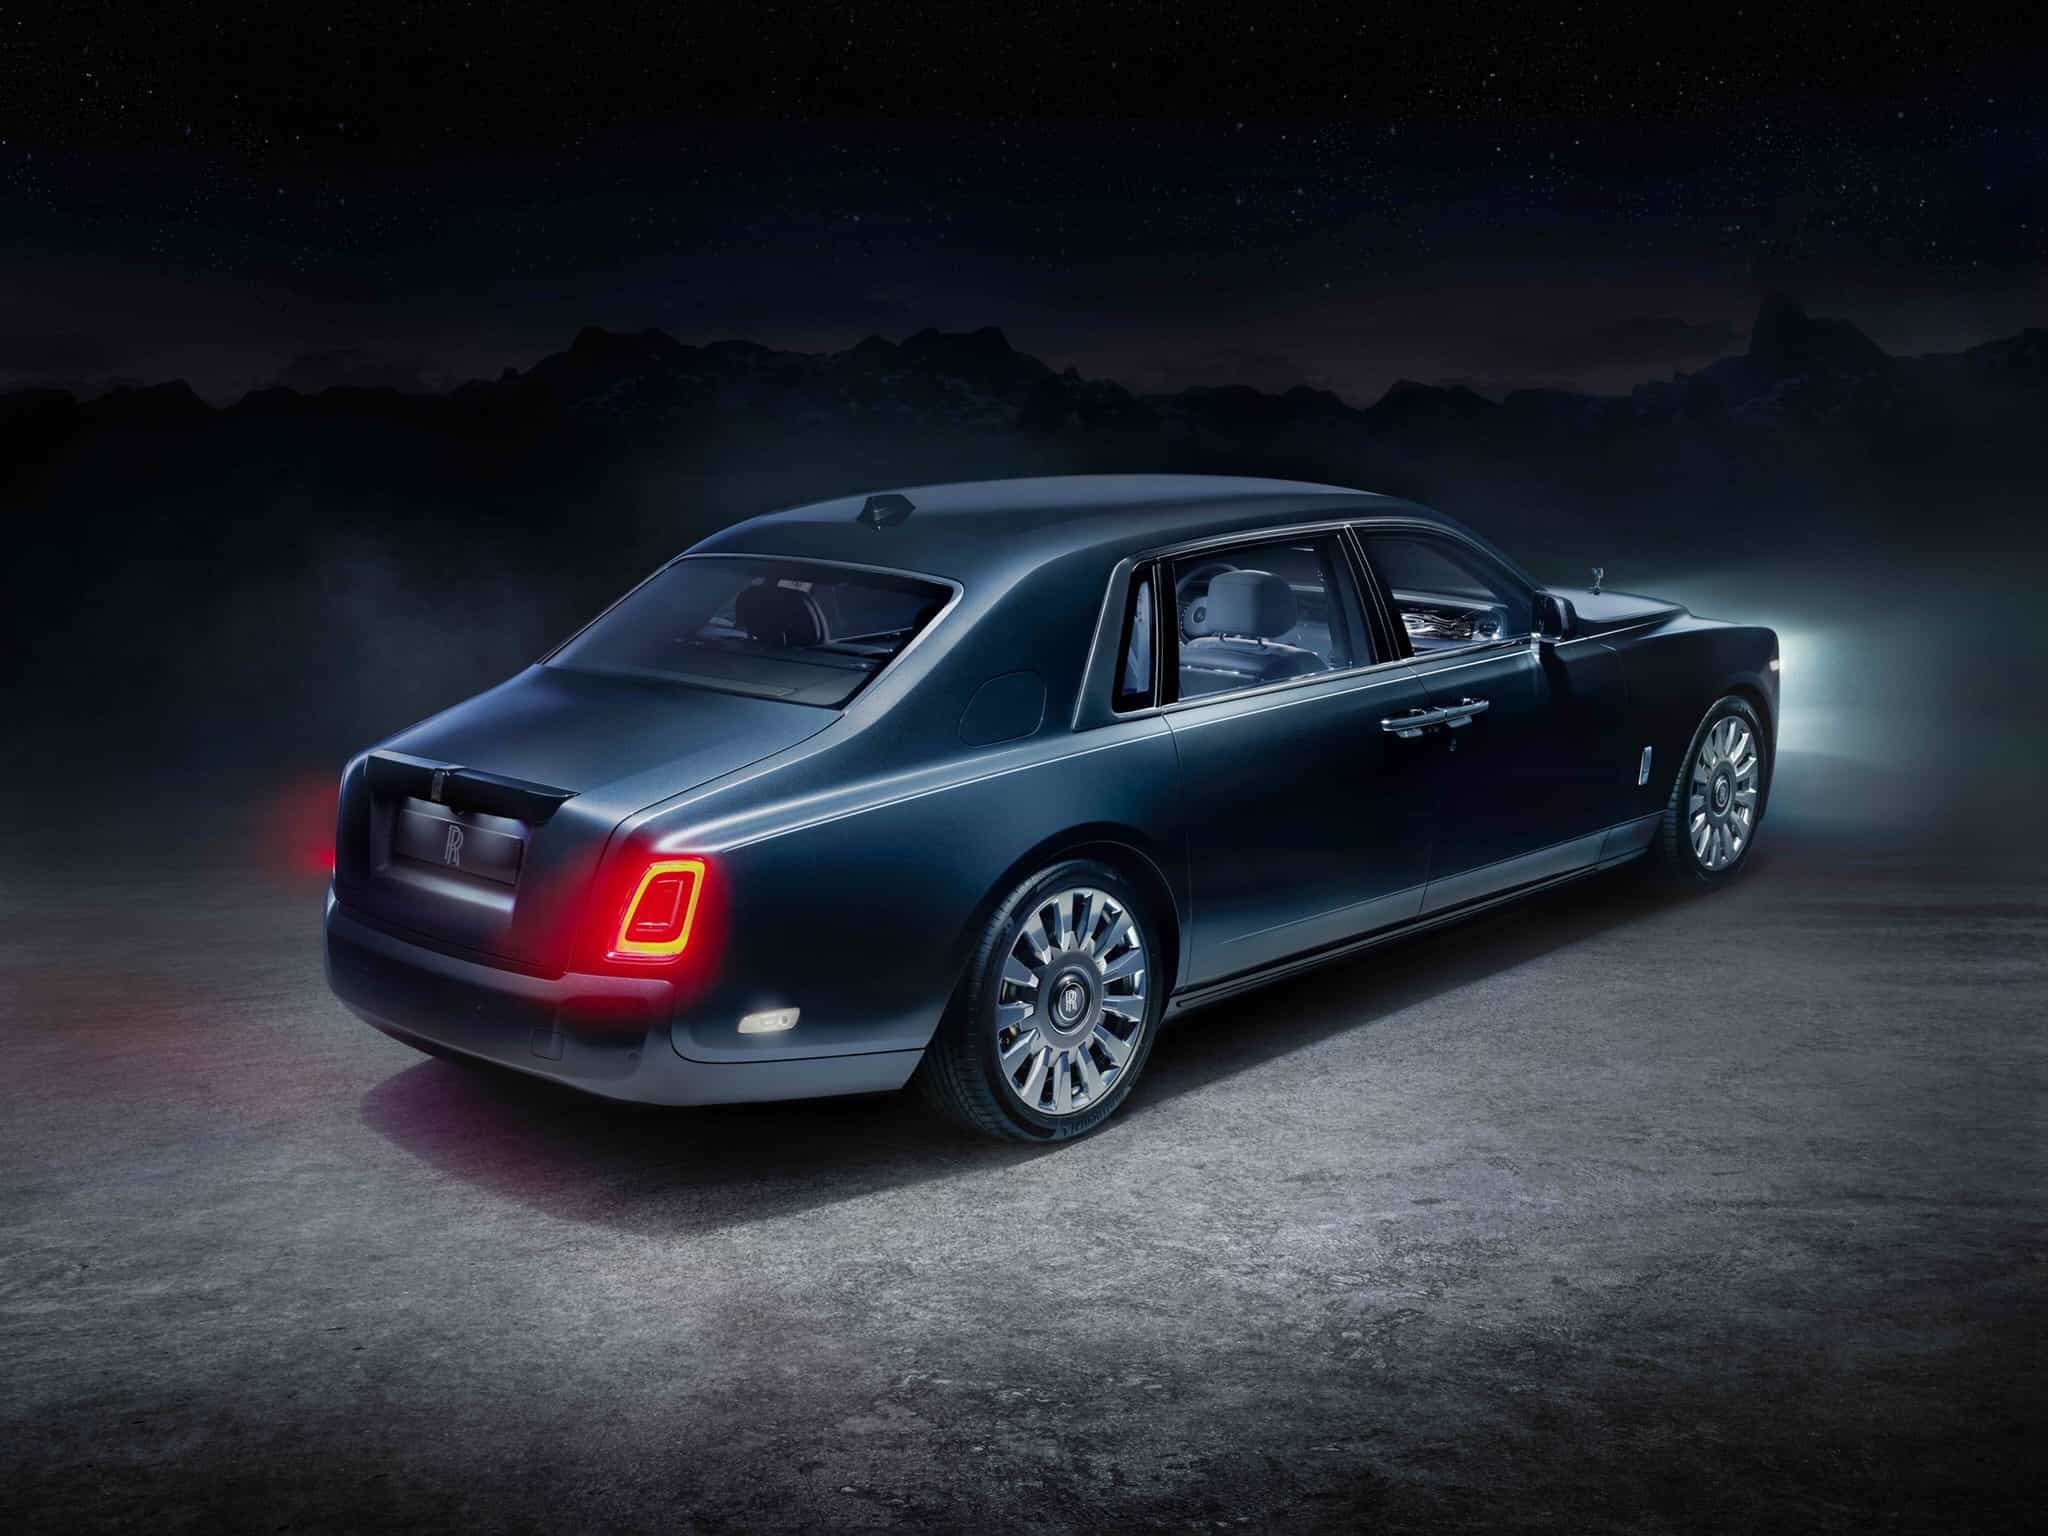 Phantom Tempus စုစည်းမှု- Rolls-Royce စတိုင်လ် သီးသန့်